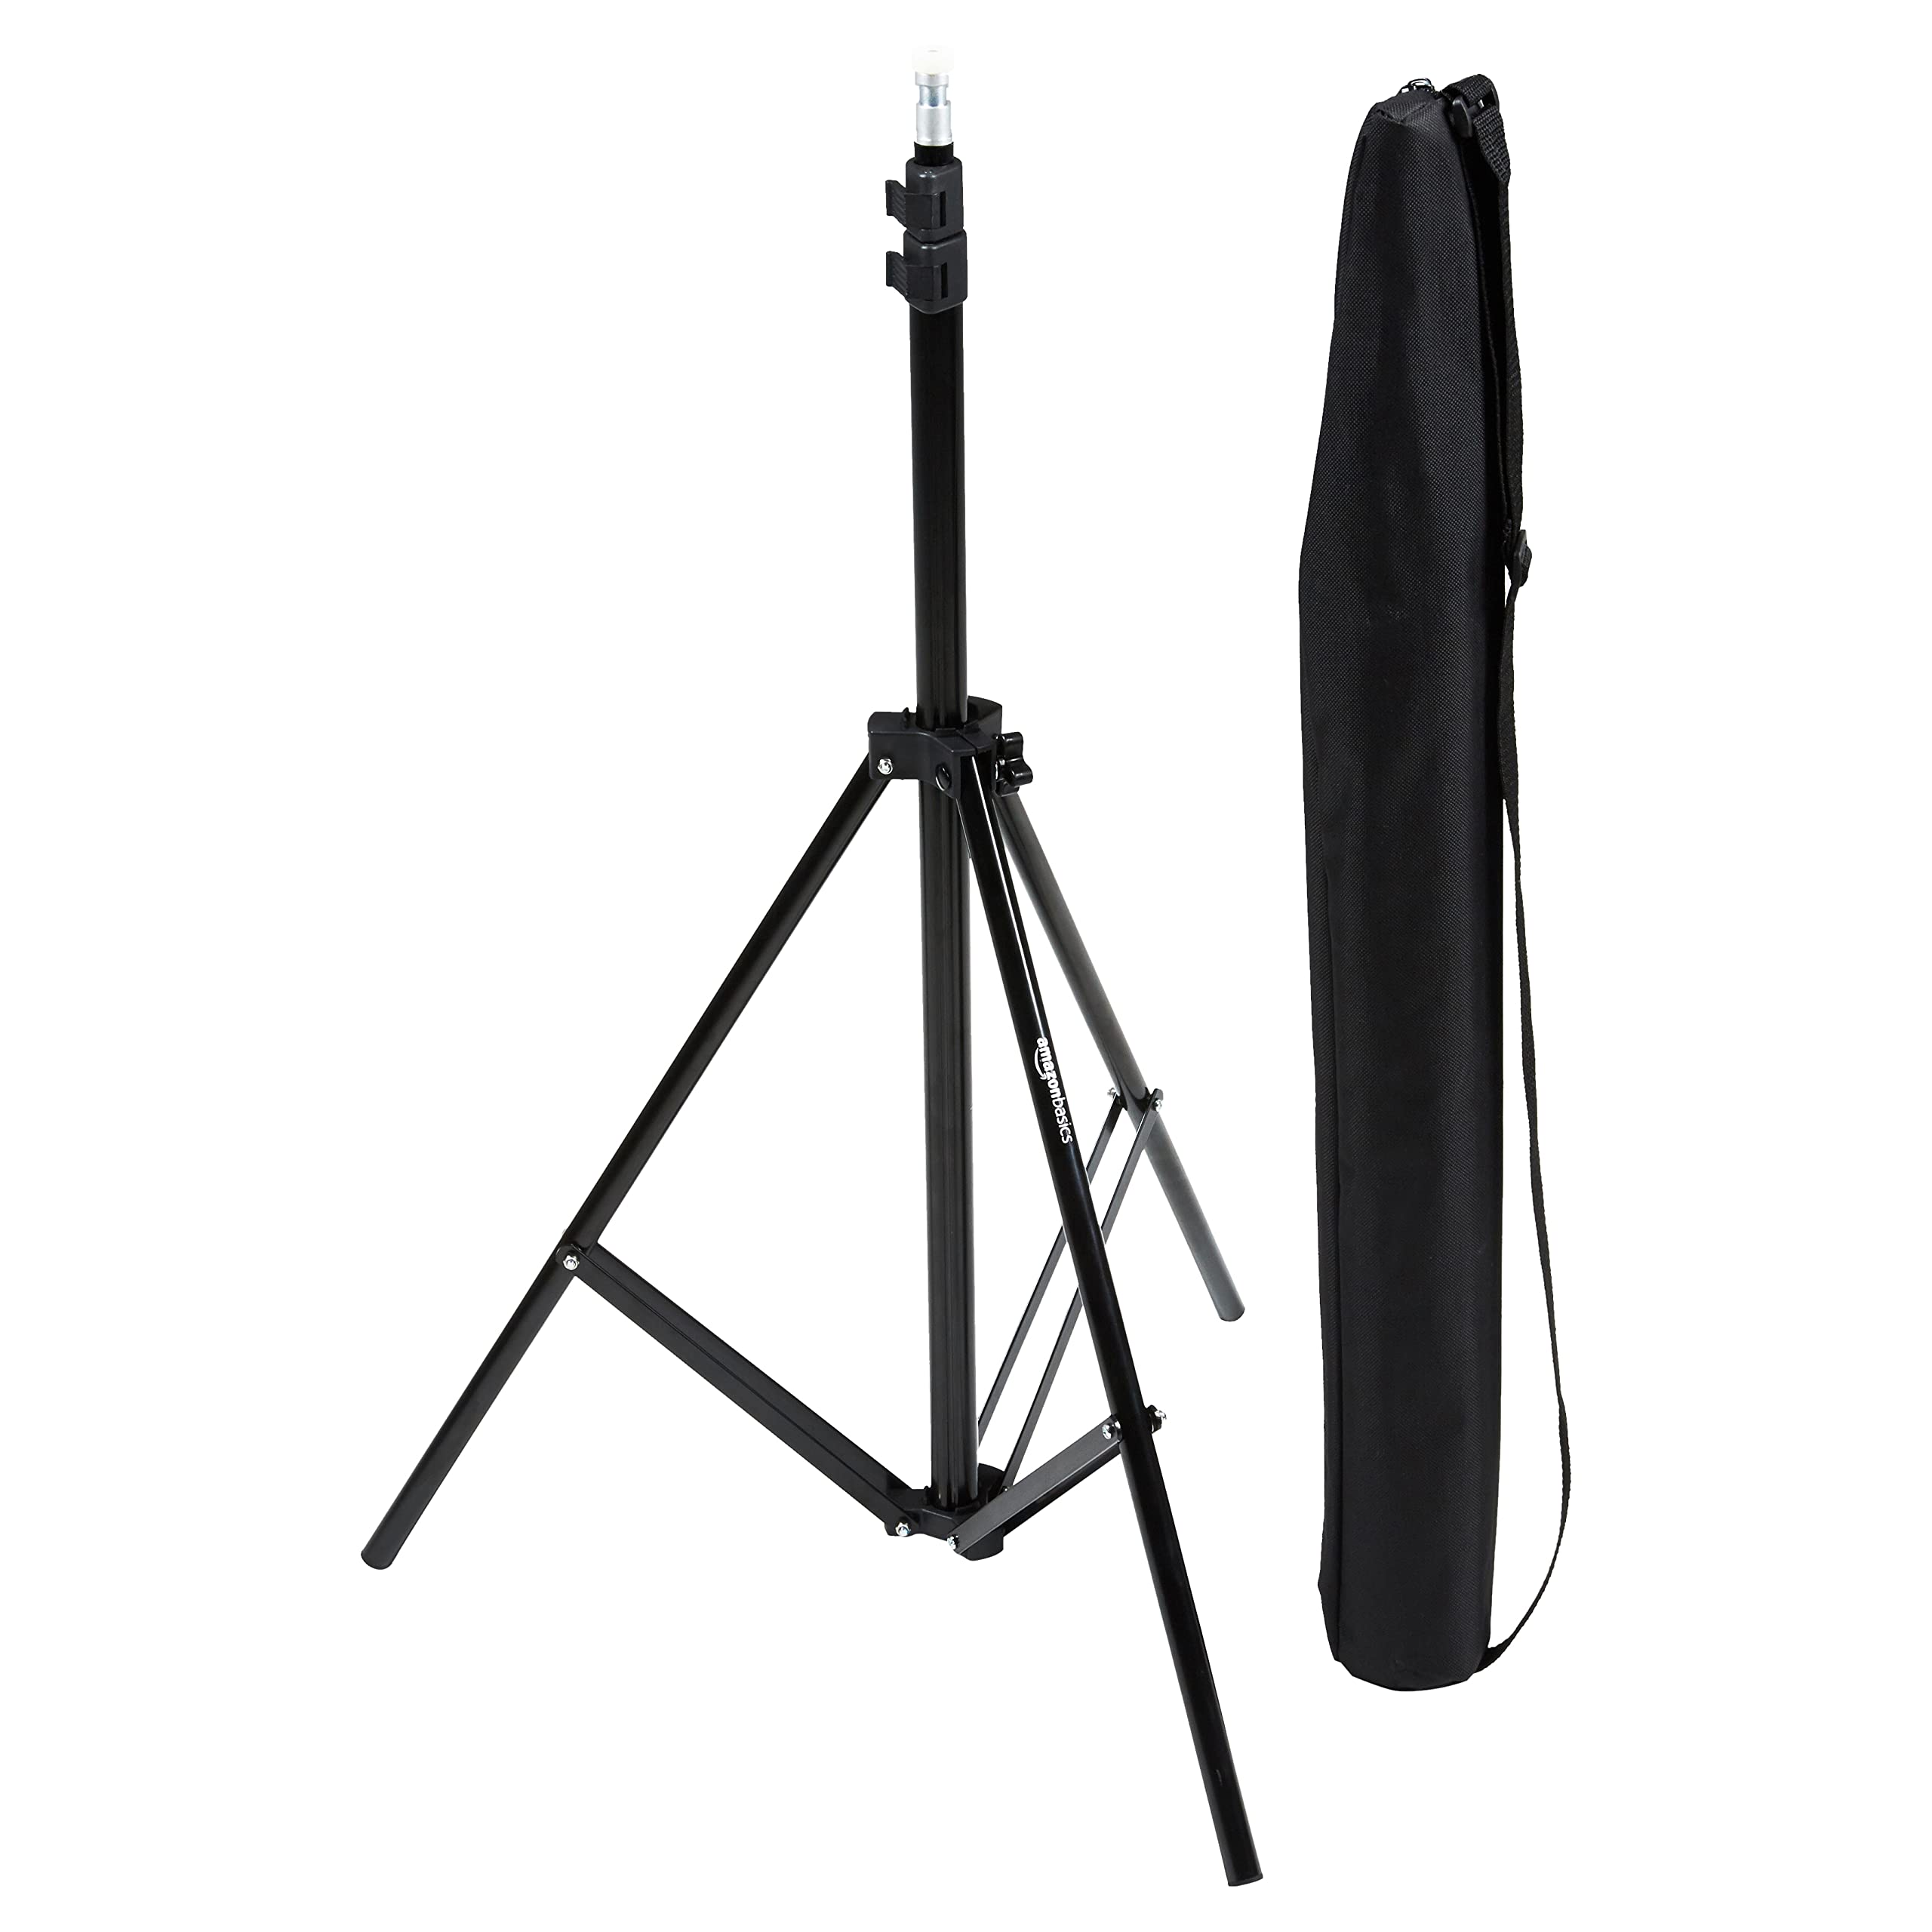 Amazon Basics Aluminum Light Photography Tripod Stand with Case - Pack of 2, 2.8 - 6.7 Feet, 3.66 Pounds, Black